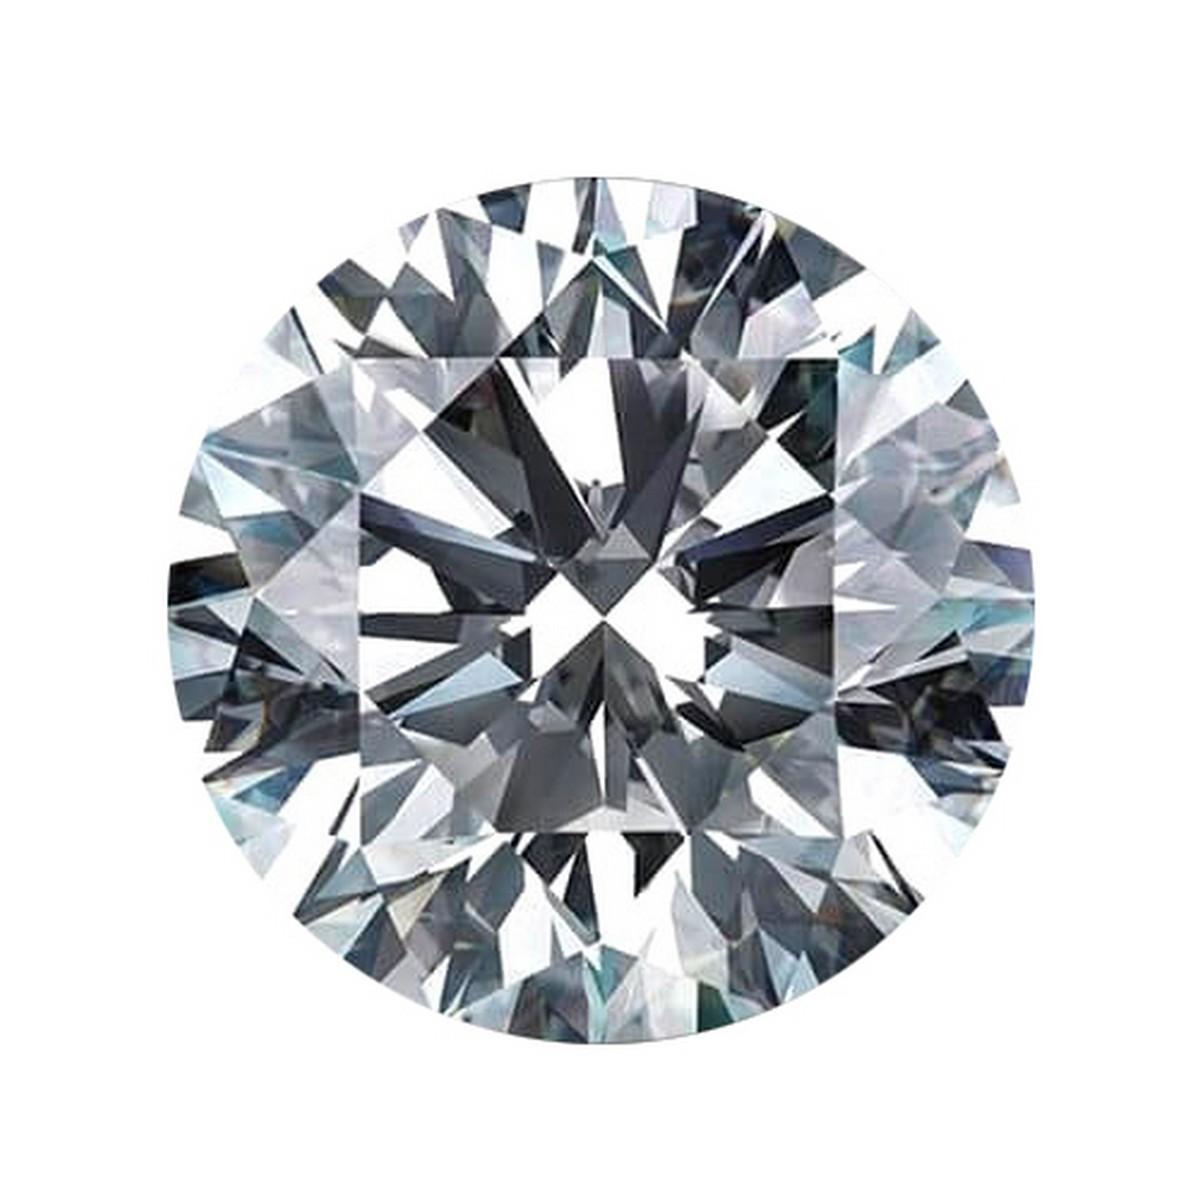 5.07 ctw. VVS2 IGI Certified Round Cut Loose Diamond (LAB GROWN)